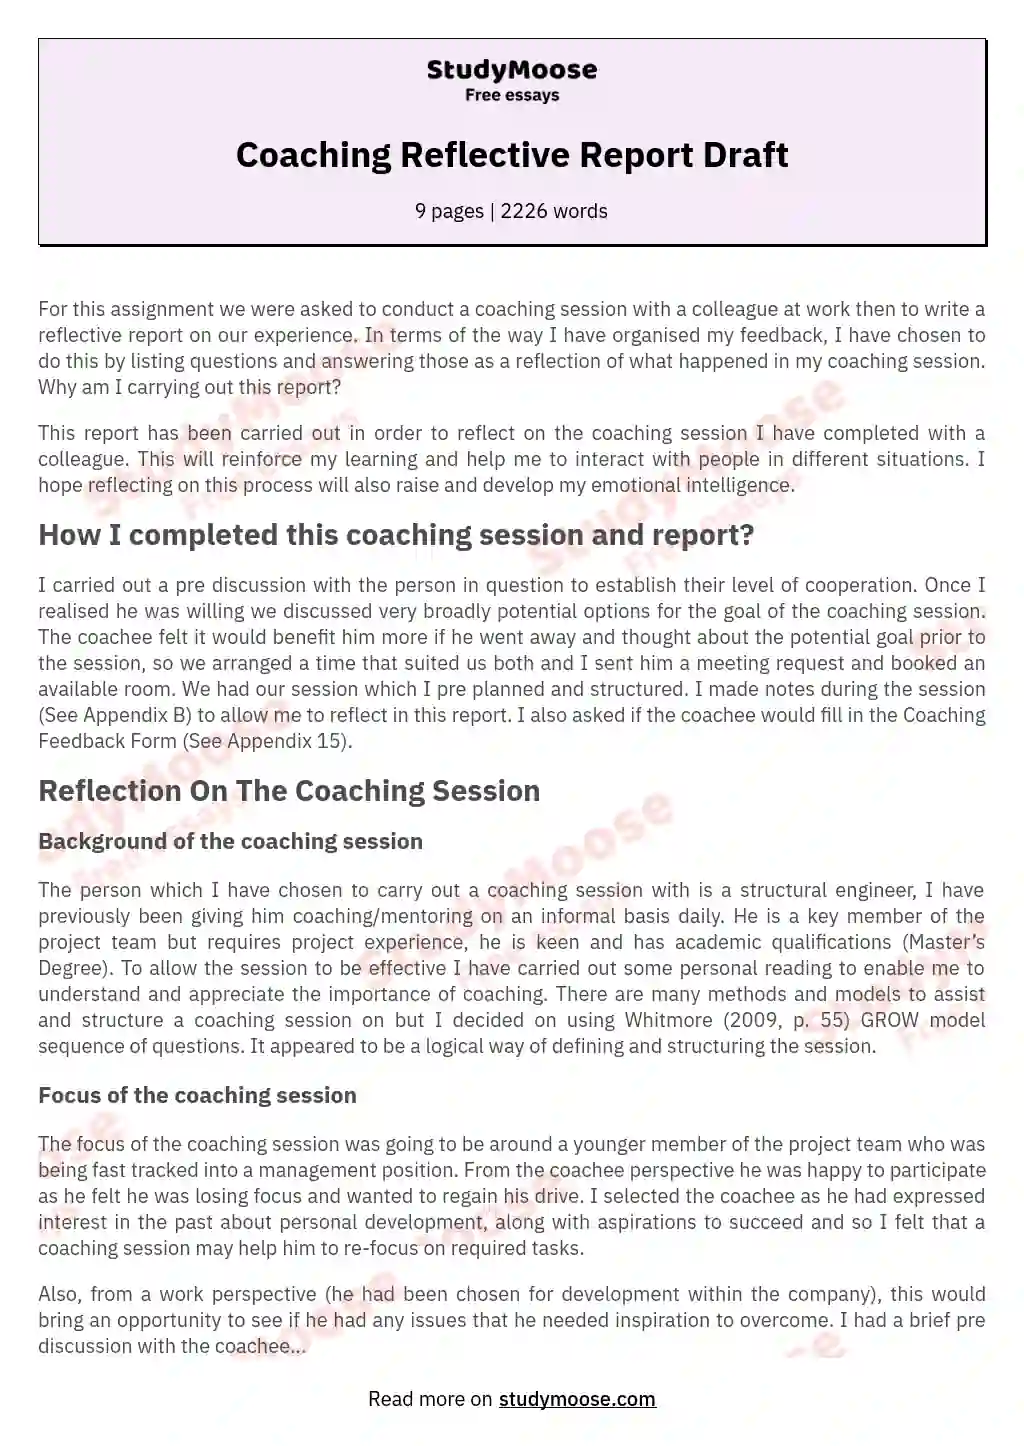 Coaching Reflective Report Draft essay